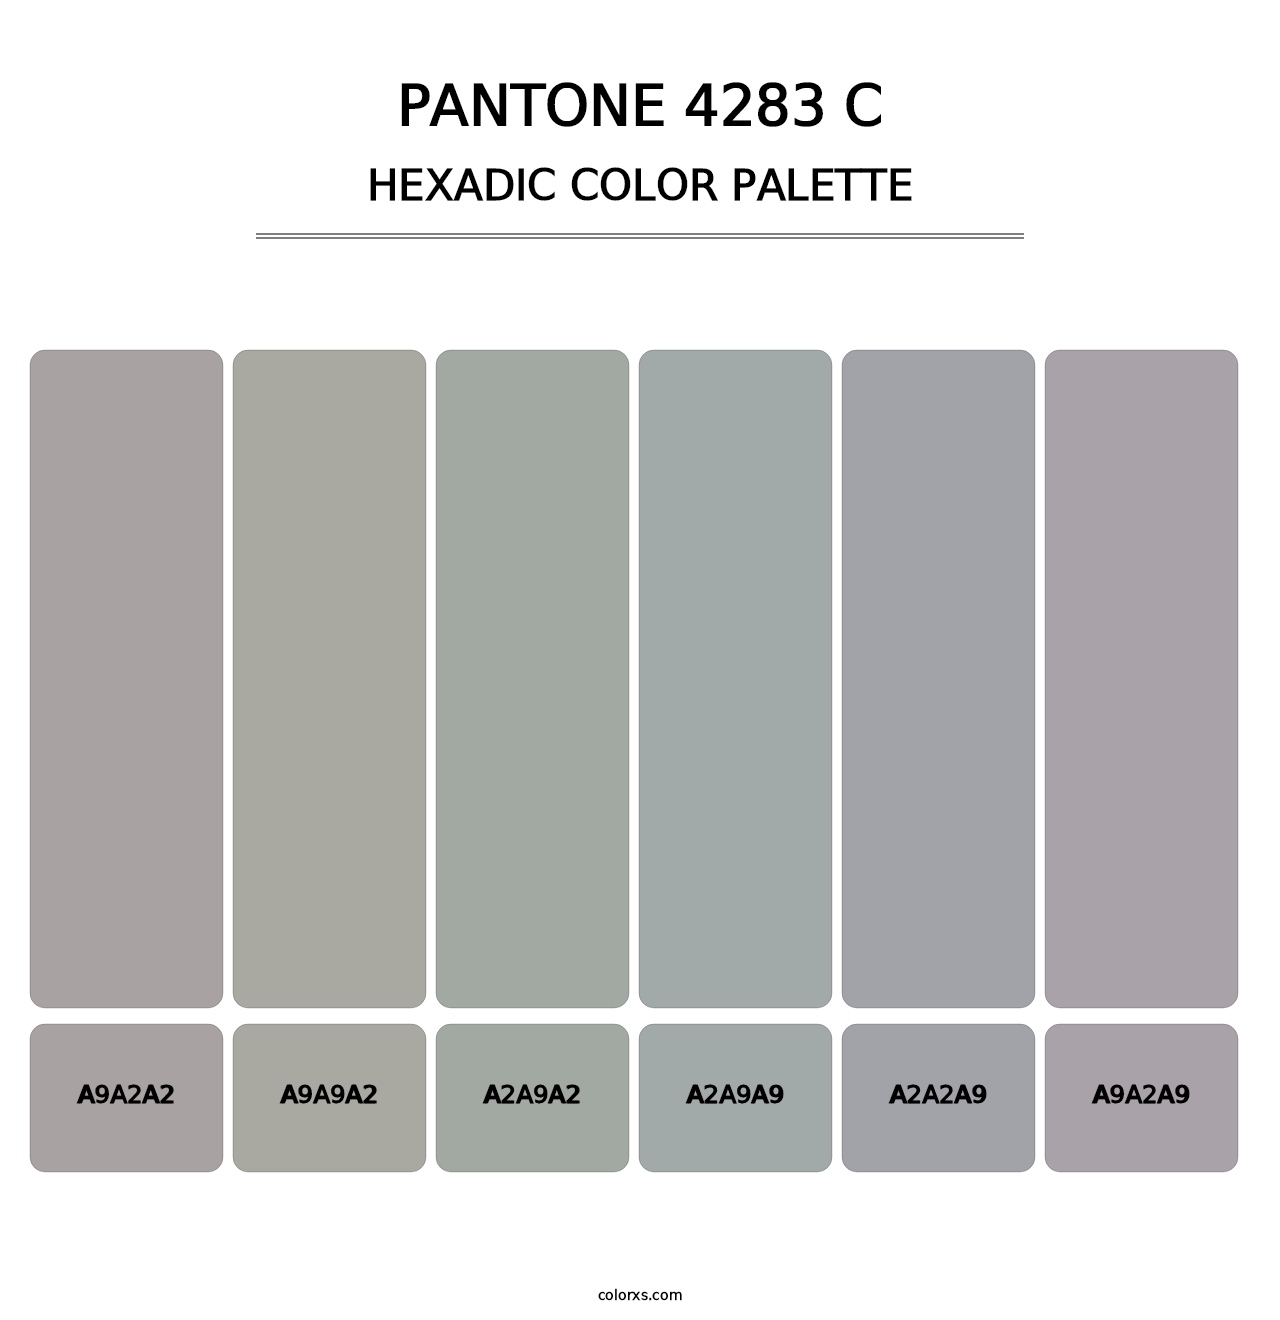 PANTONE 4283 C - Hexadic Color Palette